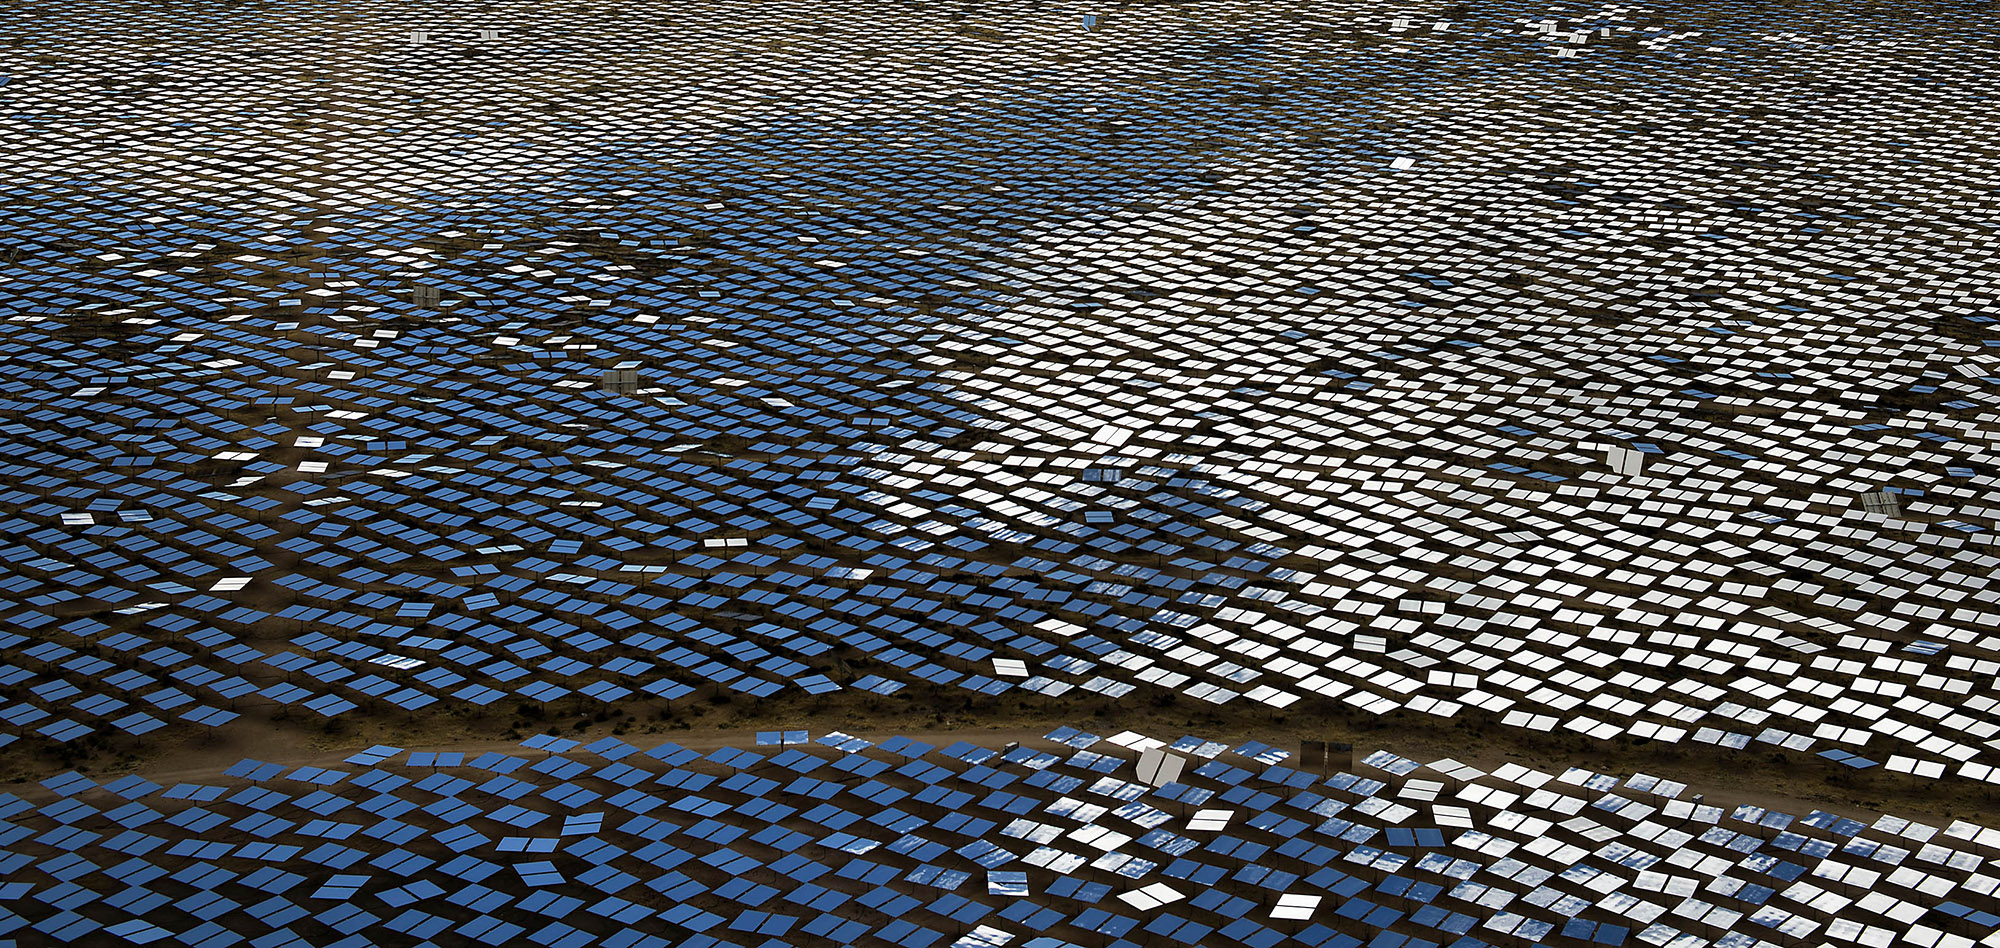 Solar panels in the Mojave Desert near Primm, Nevada.